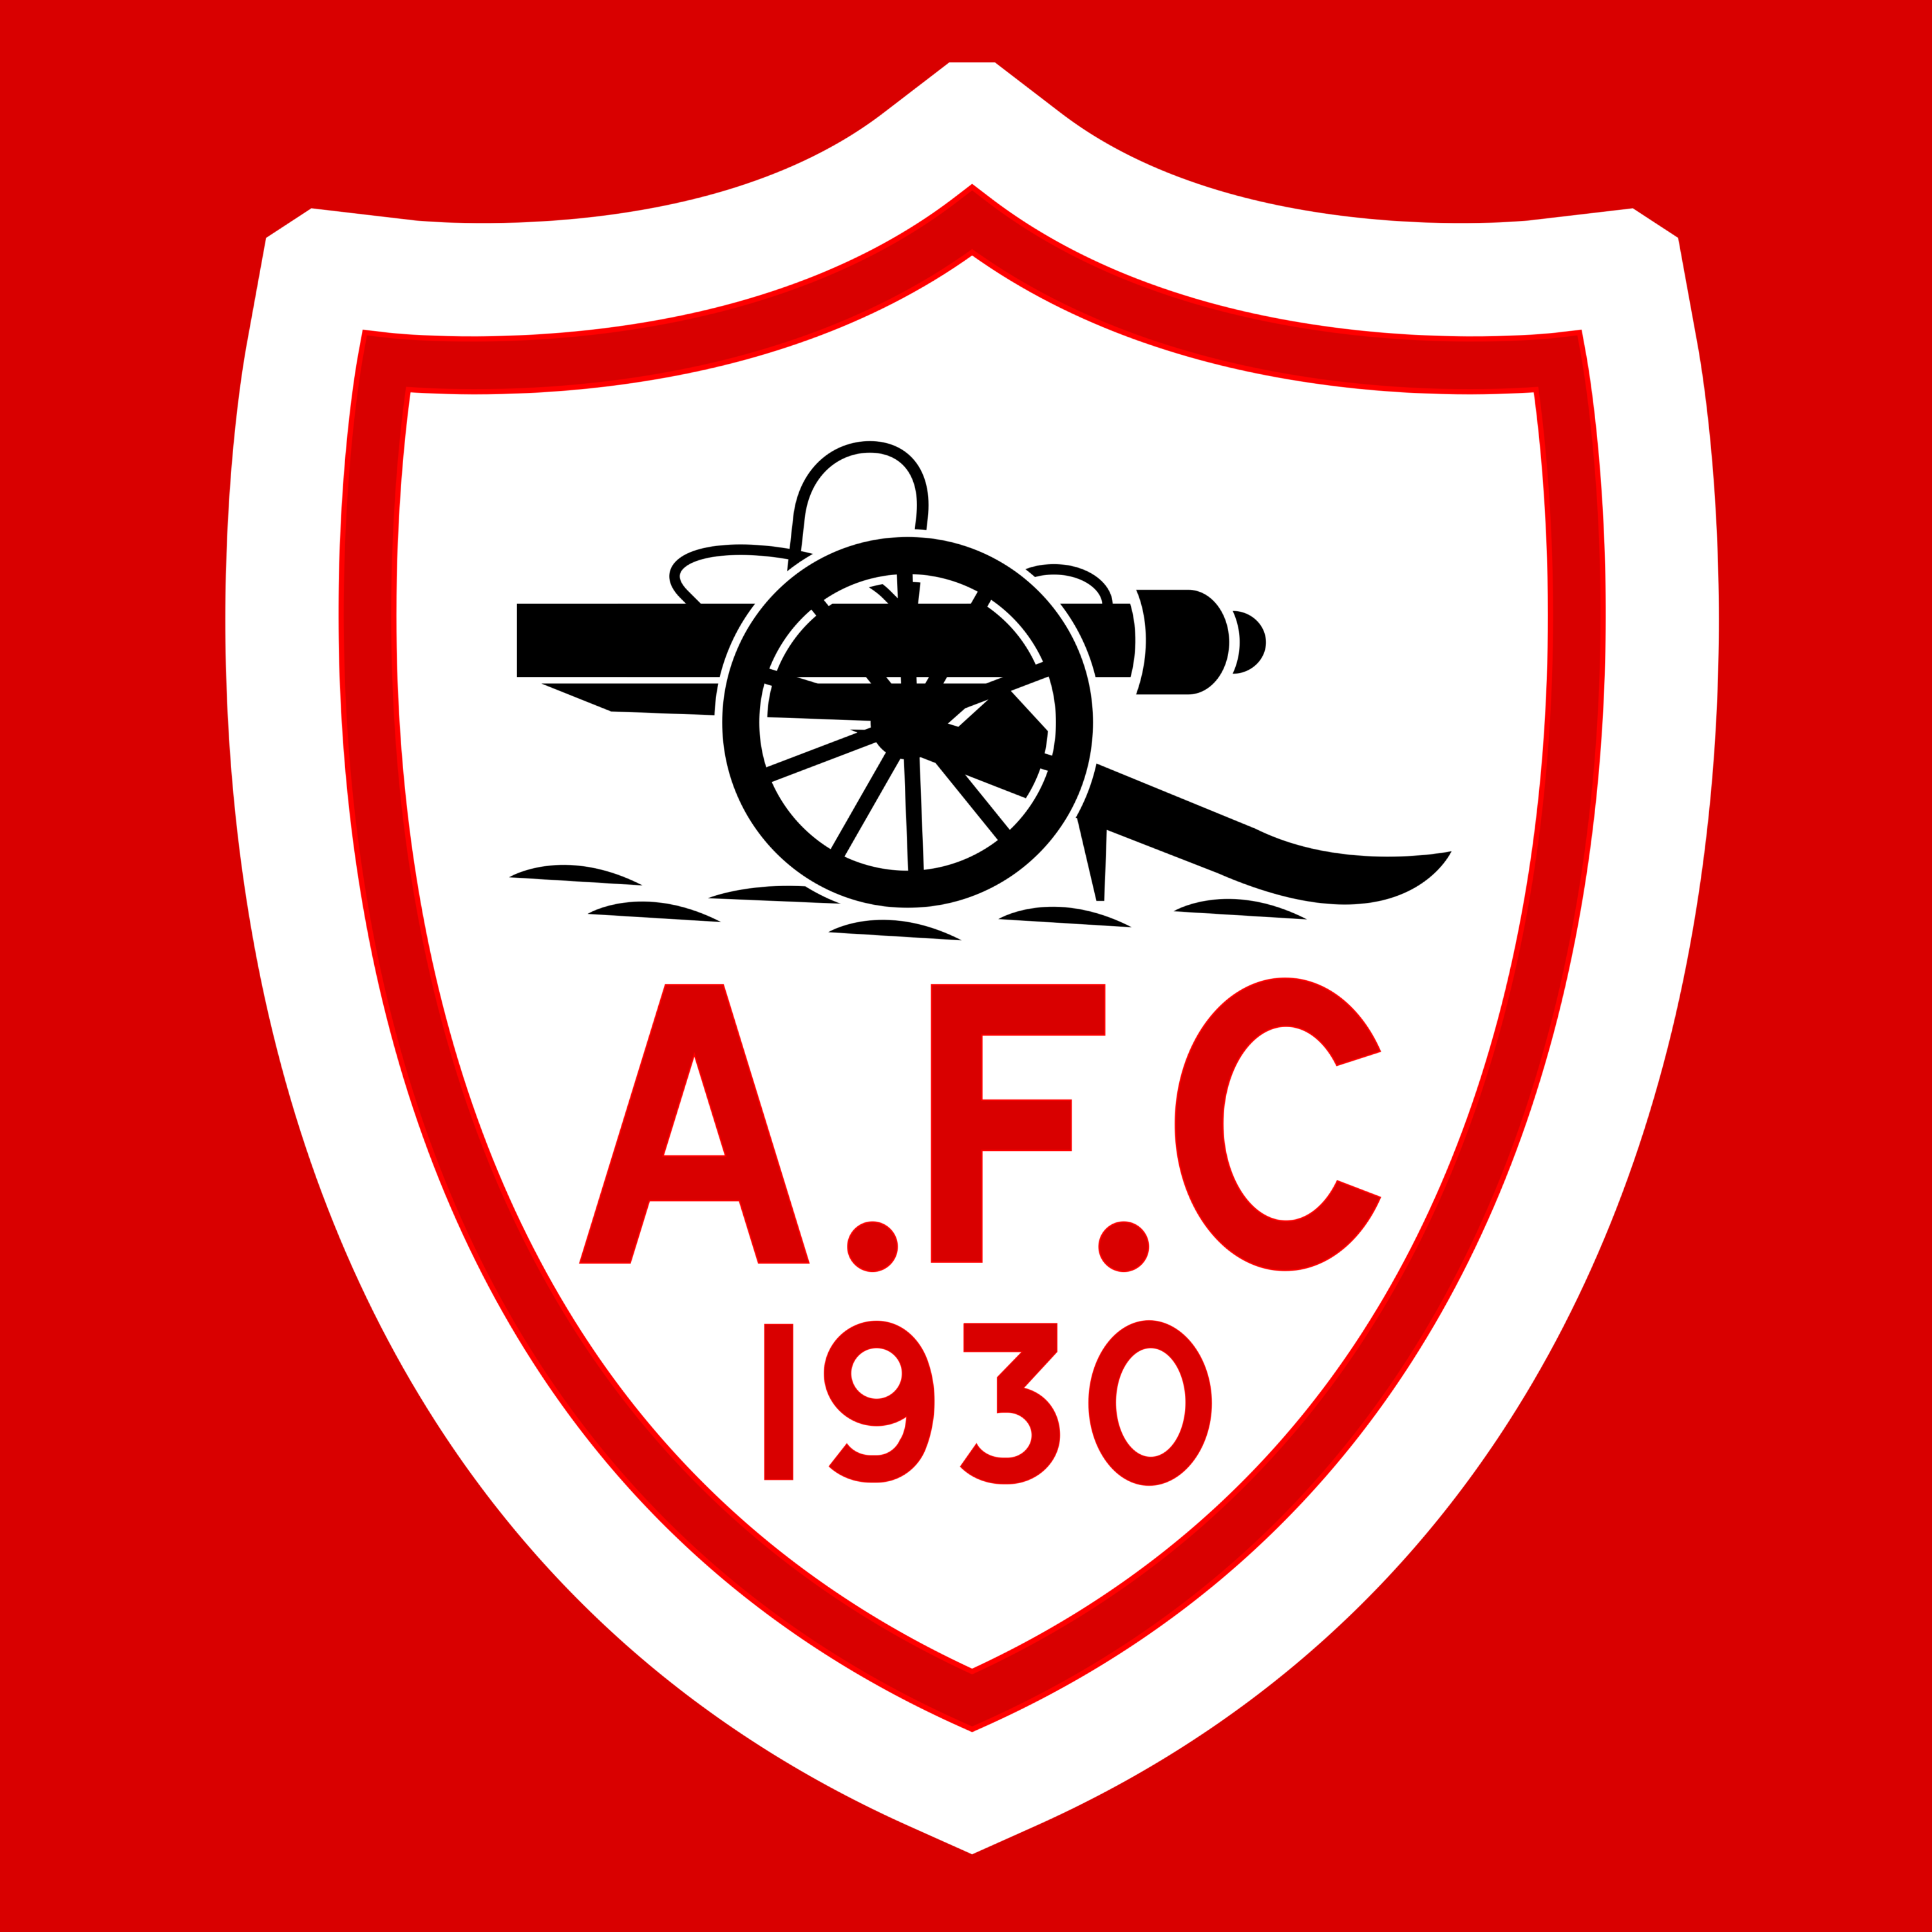 Arsenal FC Logo 1930